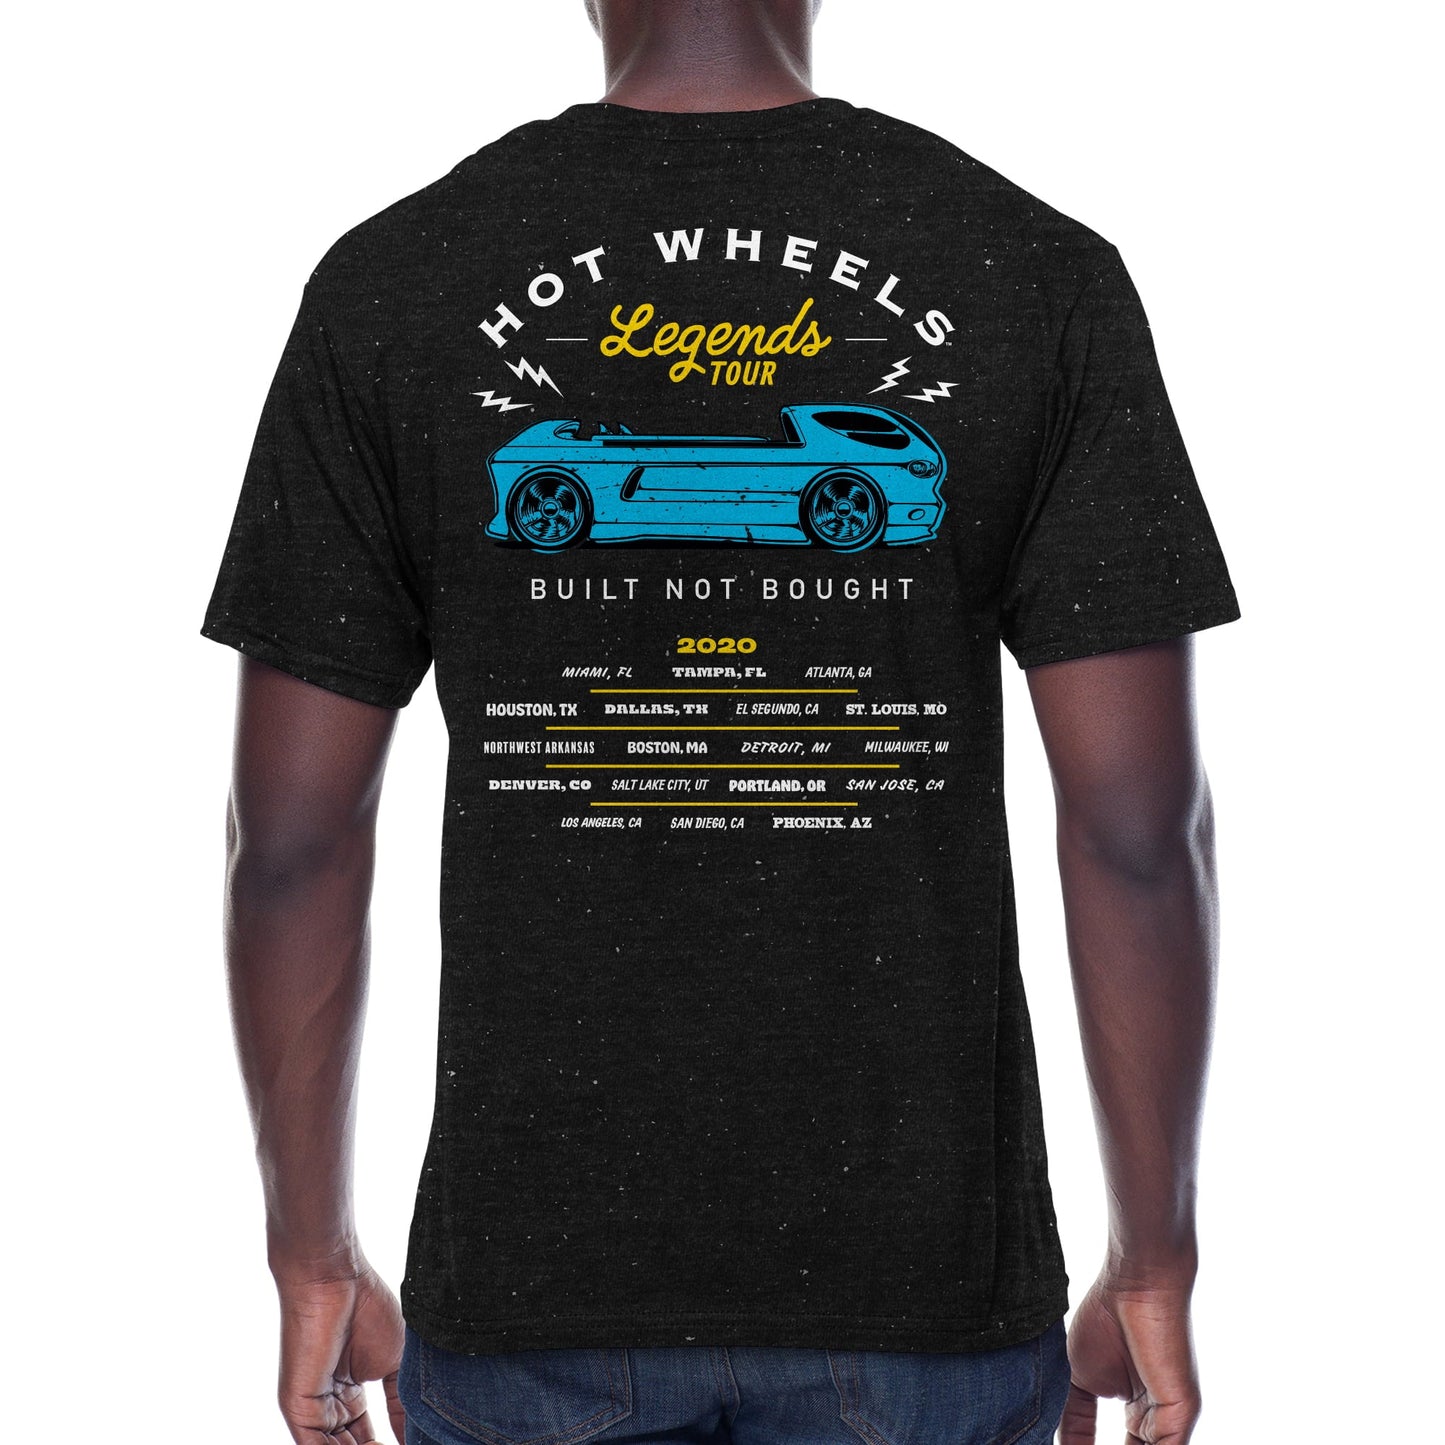 Hot Wheels Legends Tour Camiseta gráfica para hombres y hombres grandes